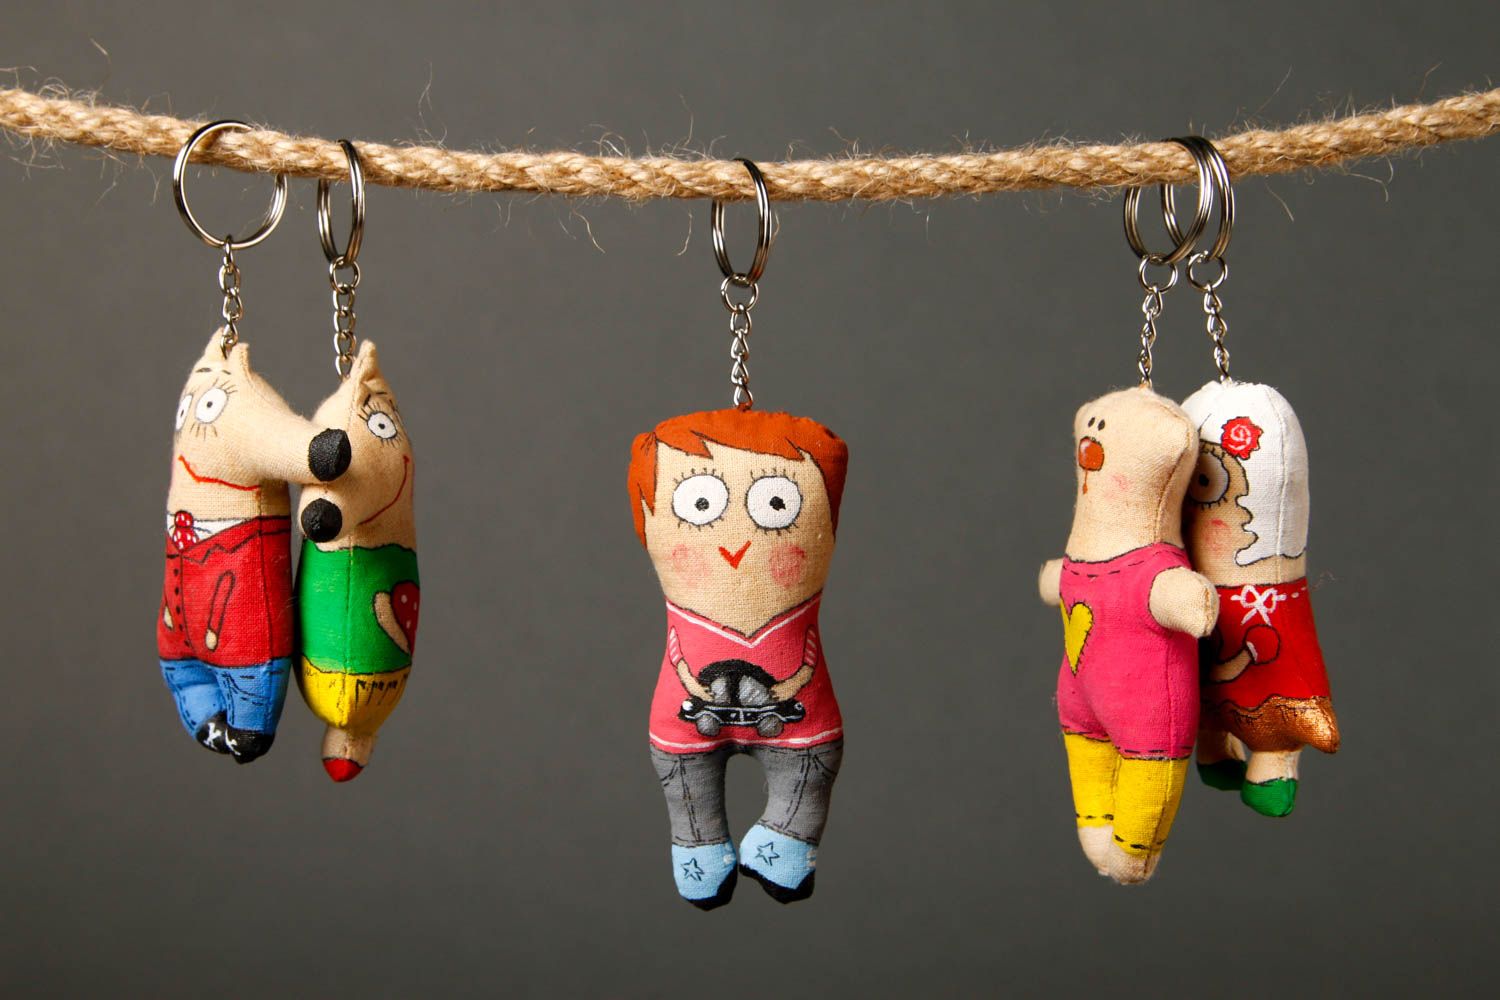 Handmade keychain unusual keychain gift ideas textile accessory for car photo 1